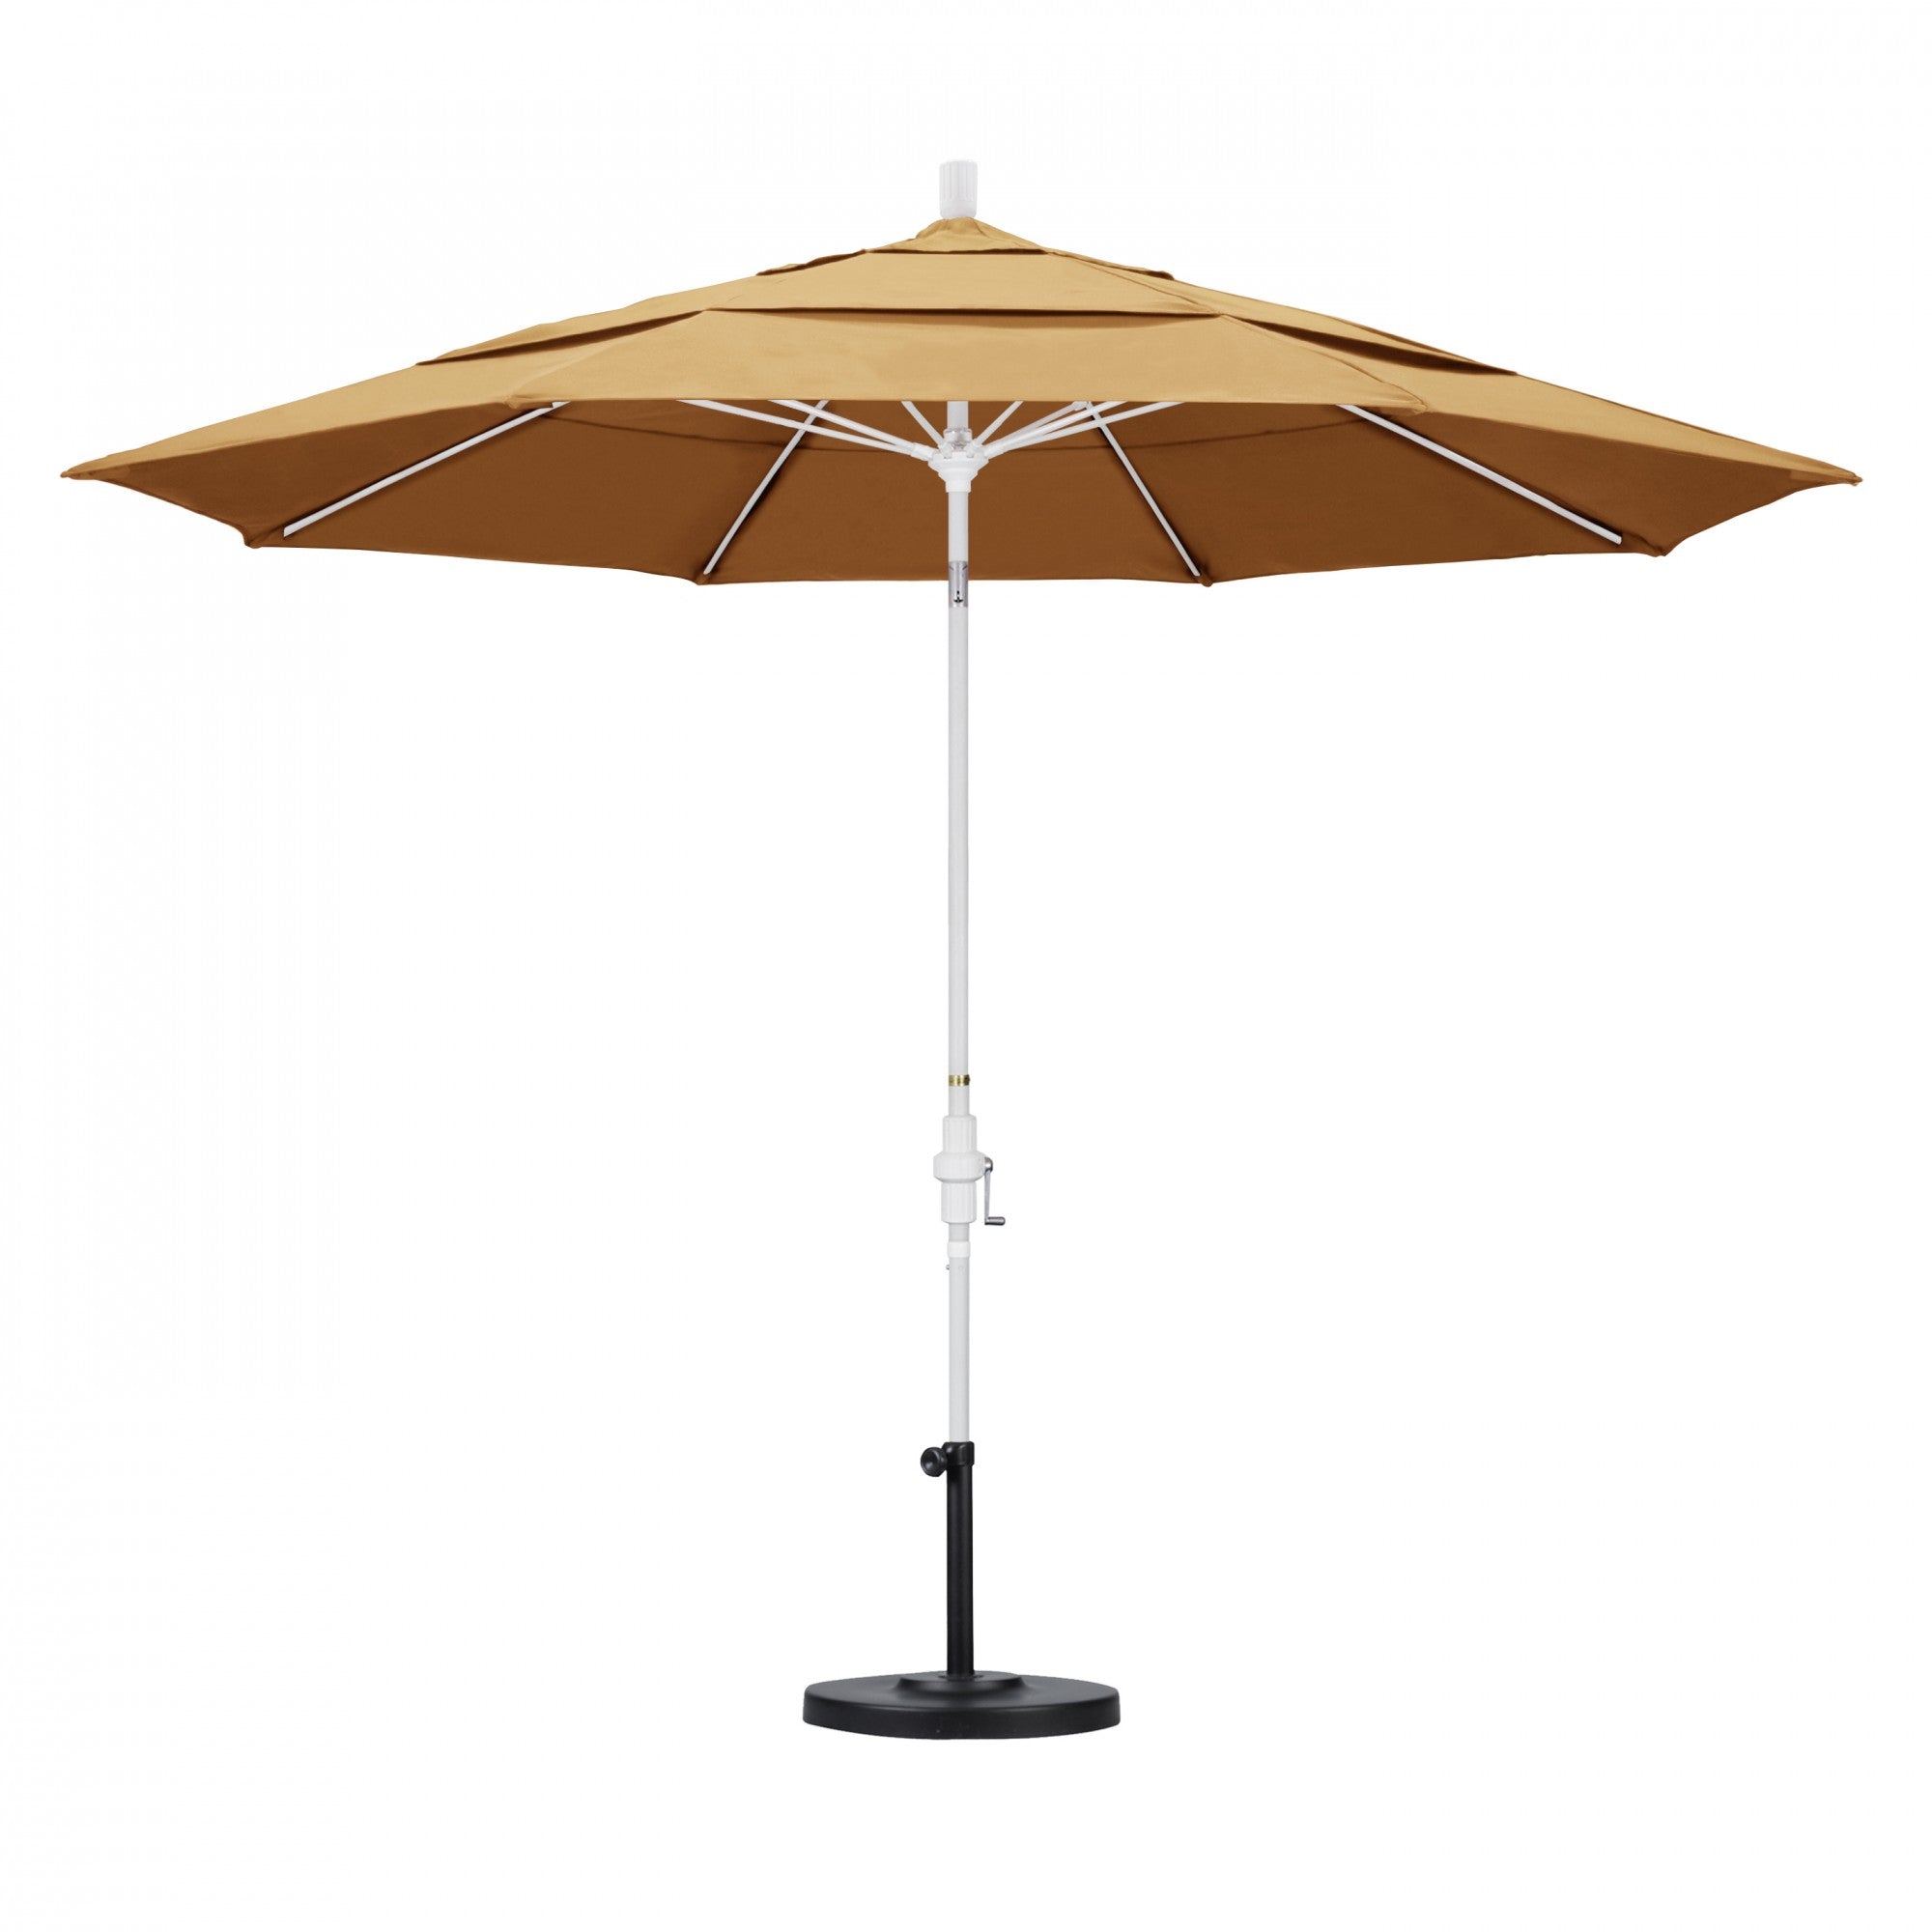 California Umbrella - 11' - Patio Umbrella Umbrella - Aluminum Pole - Wheat - Sunbrella  - GSCUF118170-5414-DWV